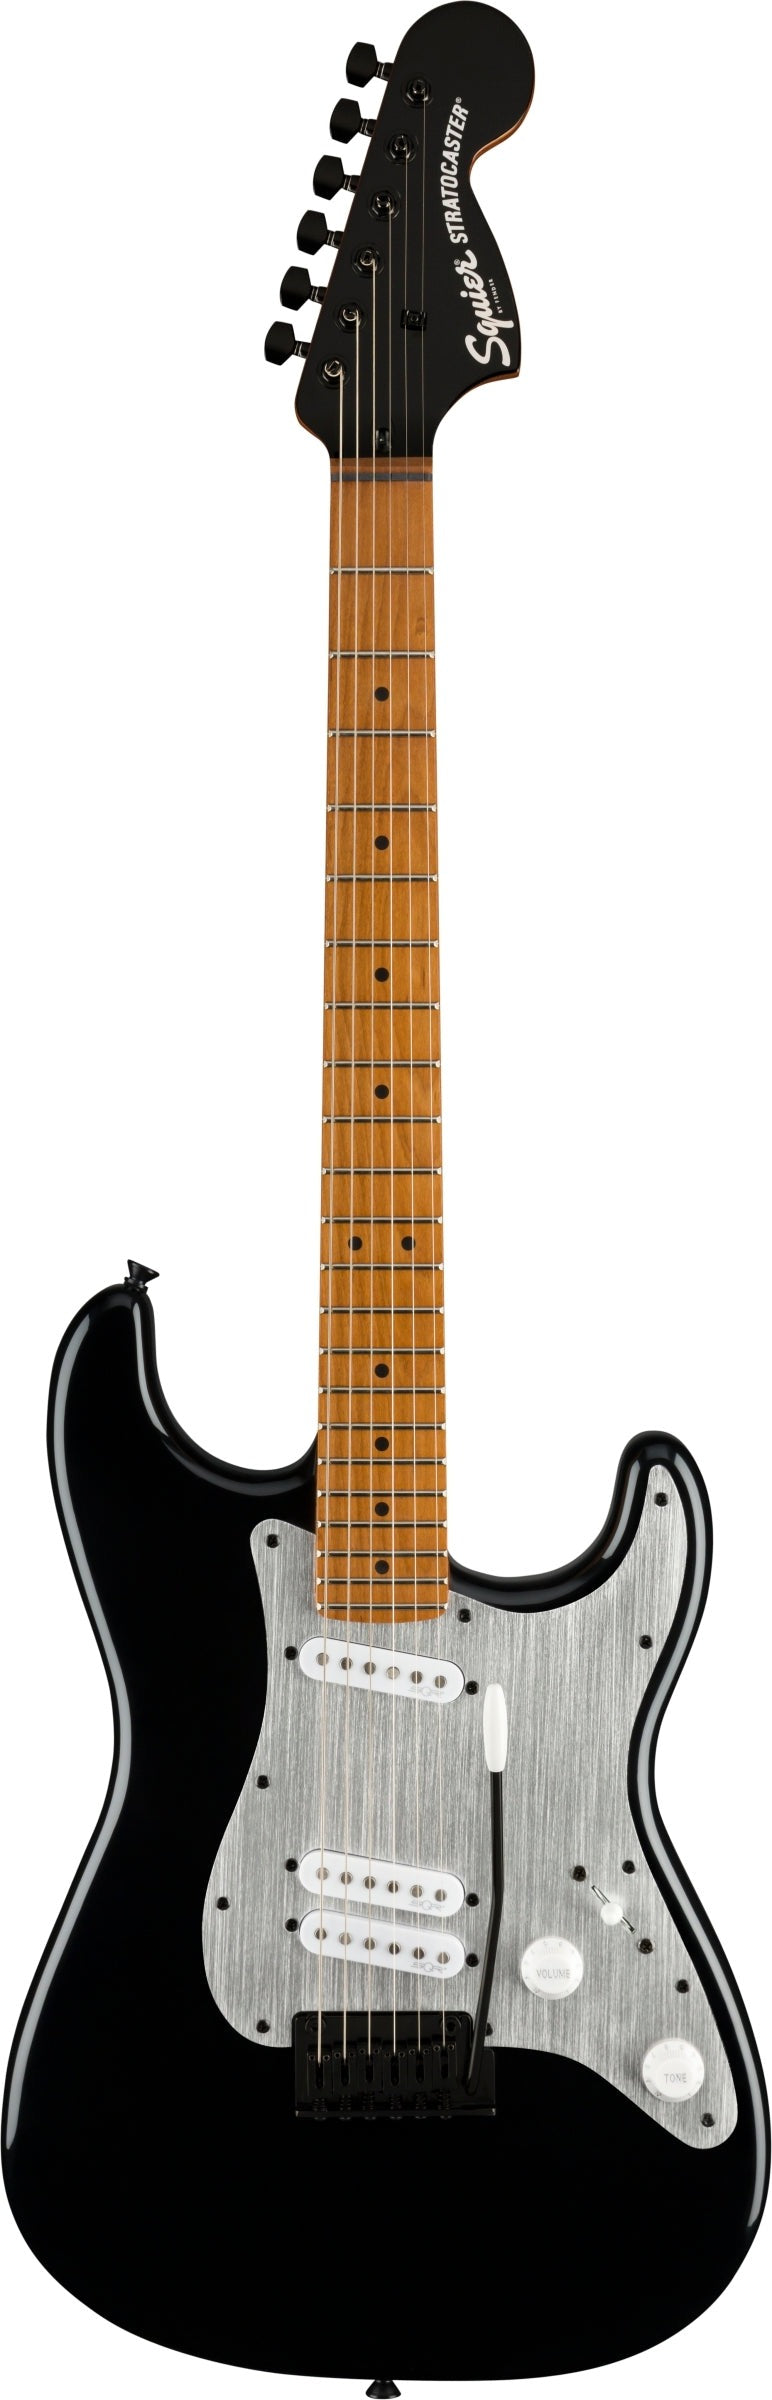 Squier Contemporary Stratocaster Special Electric Guitar - Black